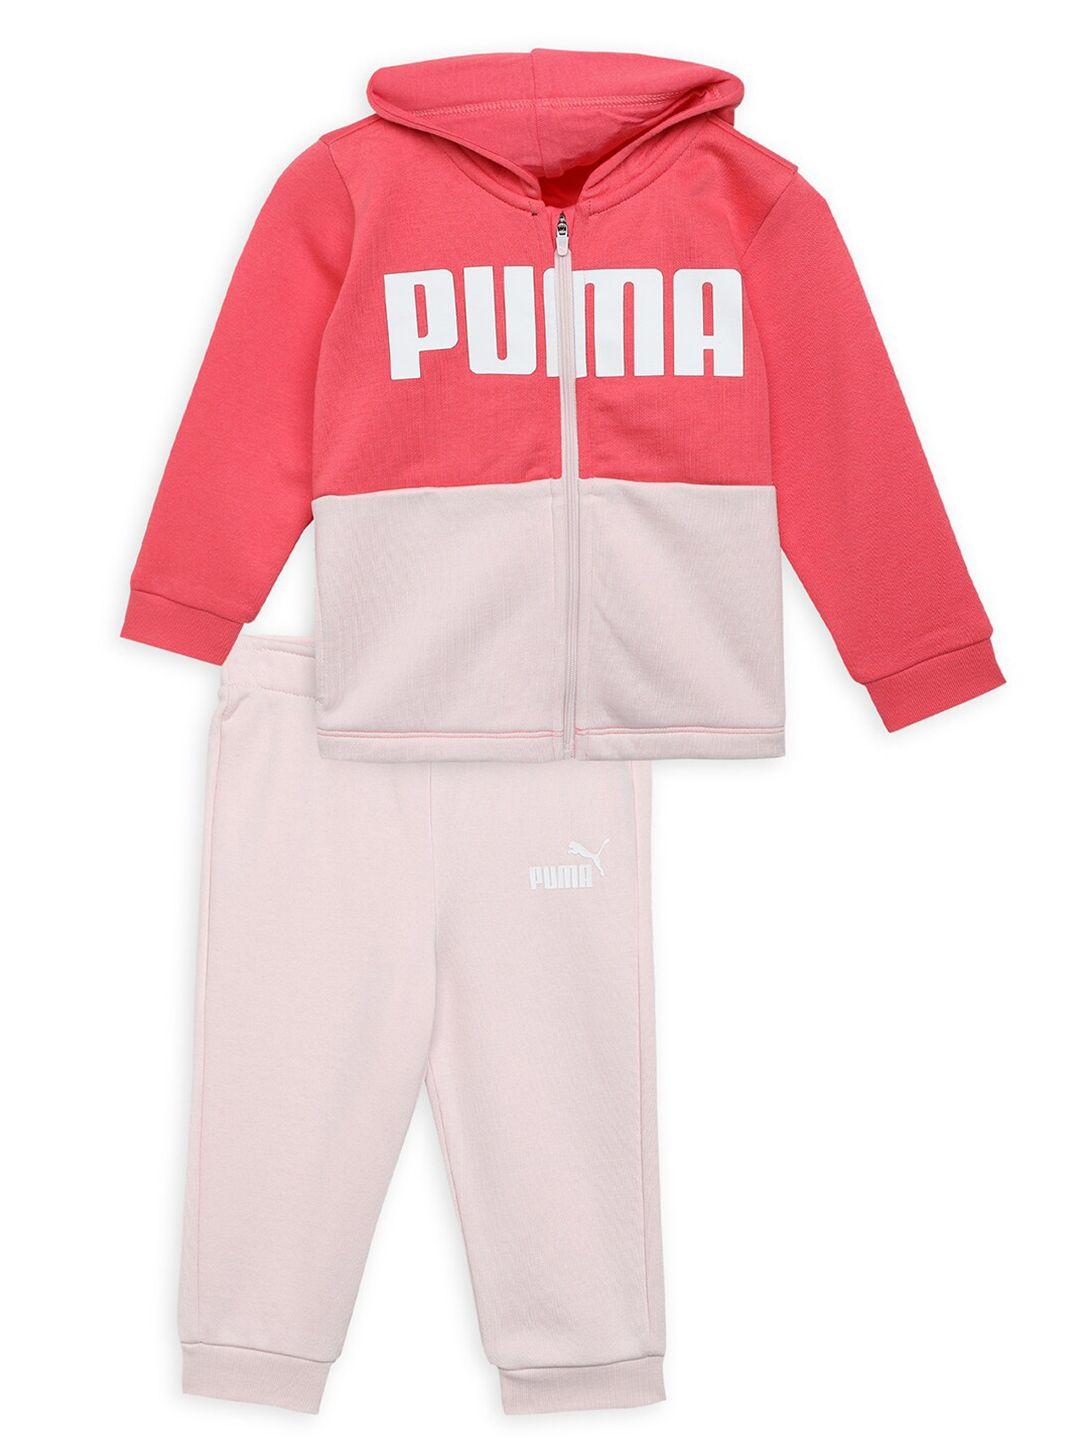 puma-kids-colourblock-clothing-set